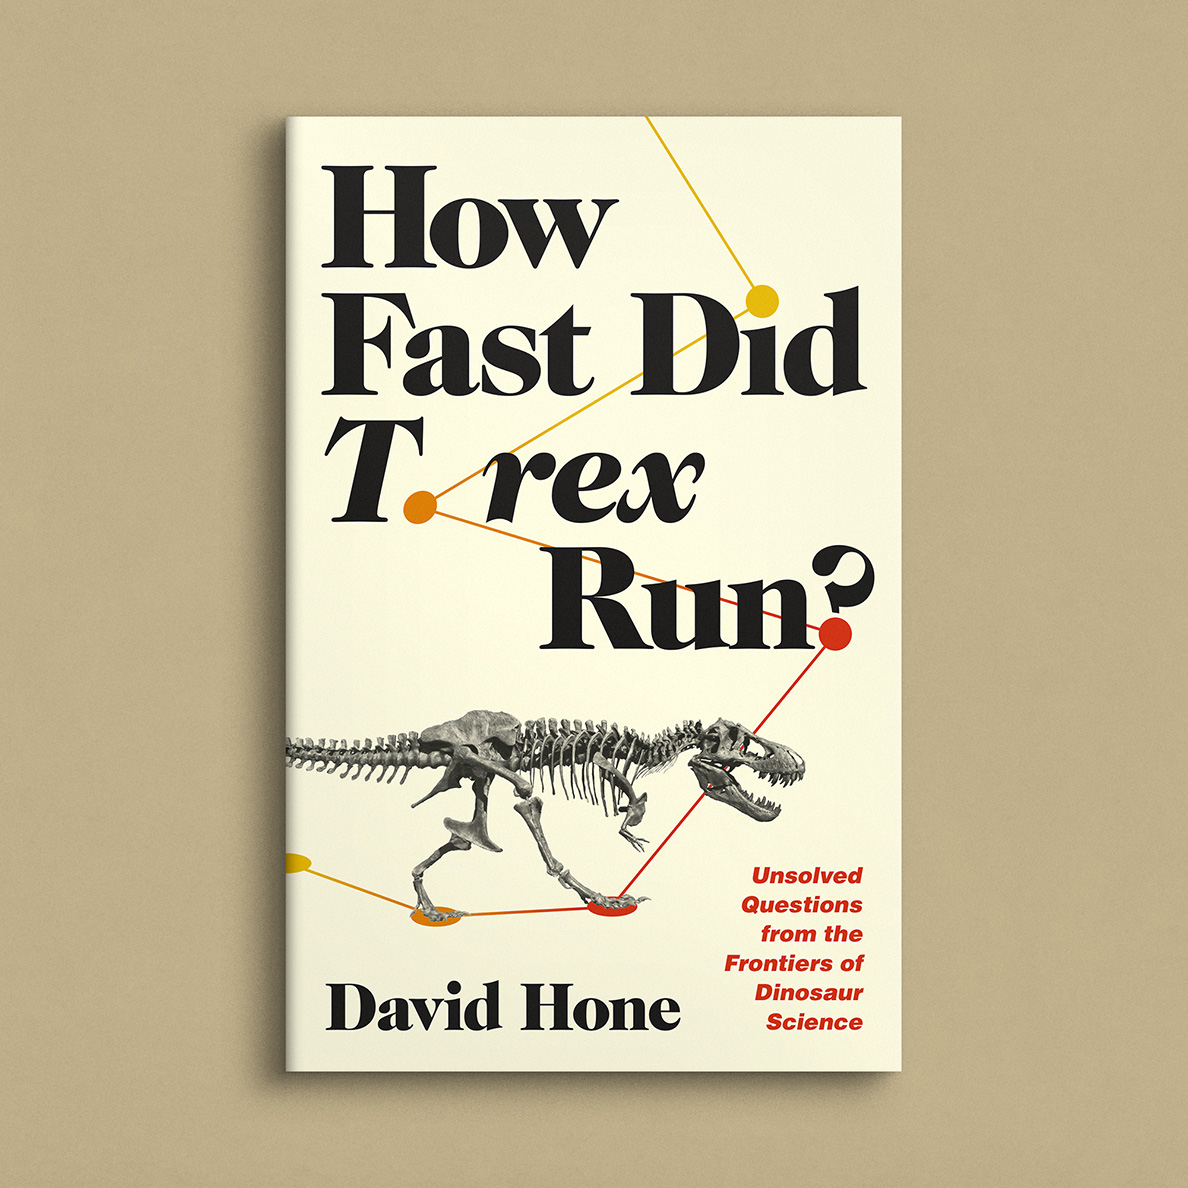 How Fast Did T. Rex Run? book cover